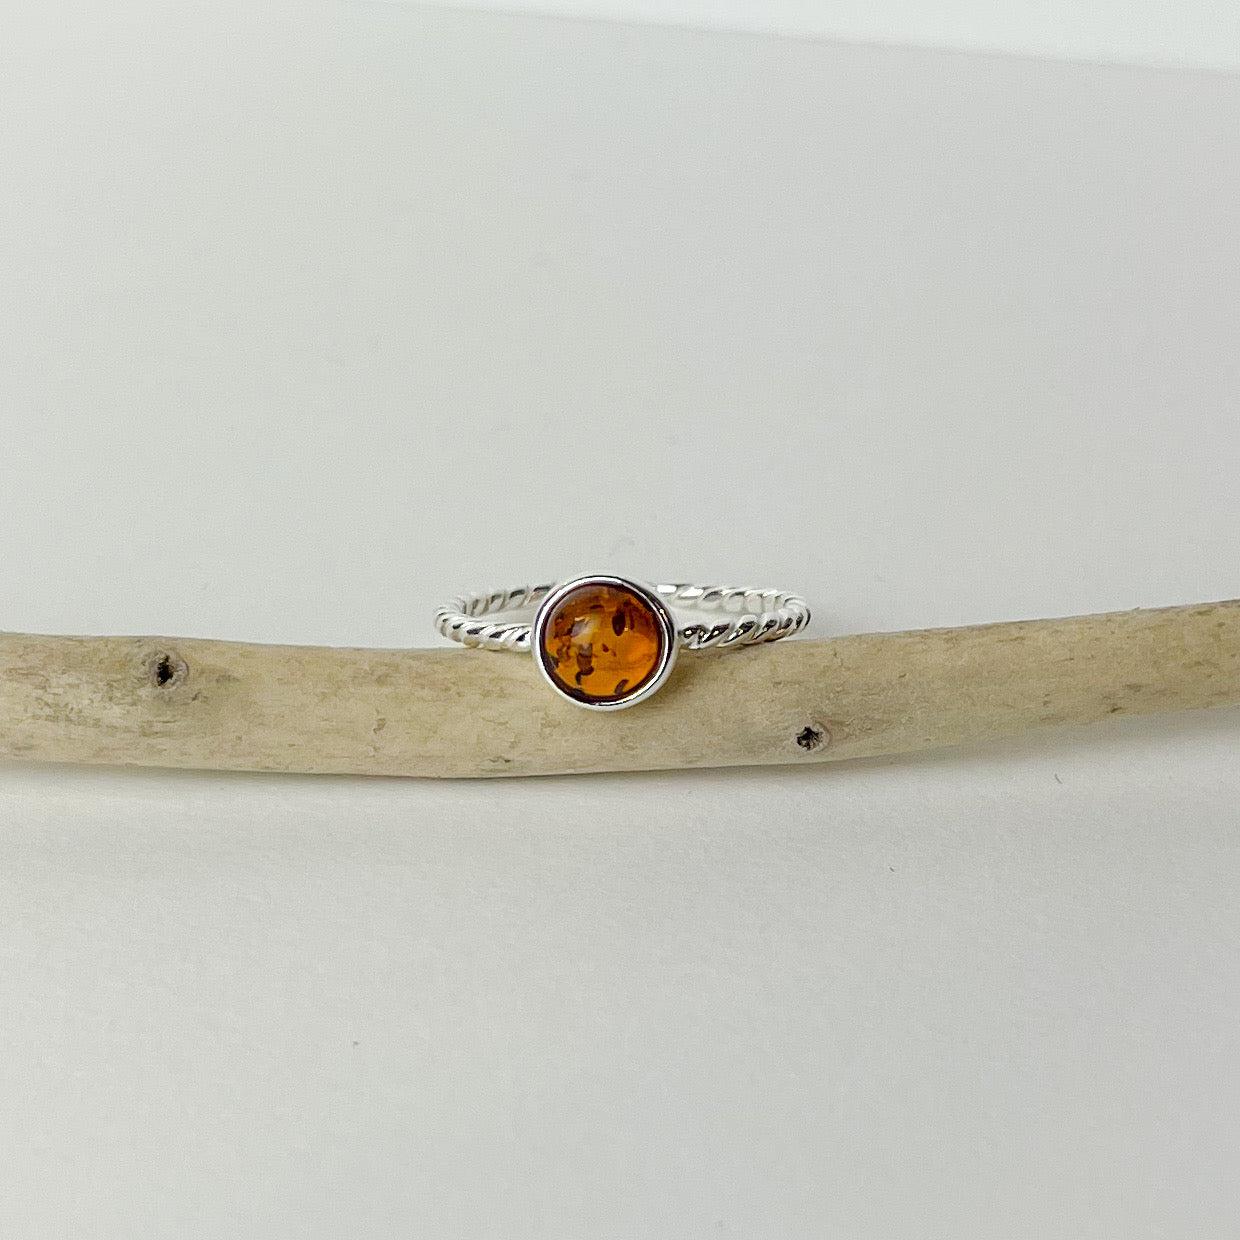 Small Amber Dot Ring - The Nancy Smillie Shop - Art, Jewellery & Designer Gifts Glasgow